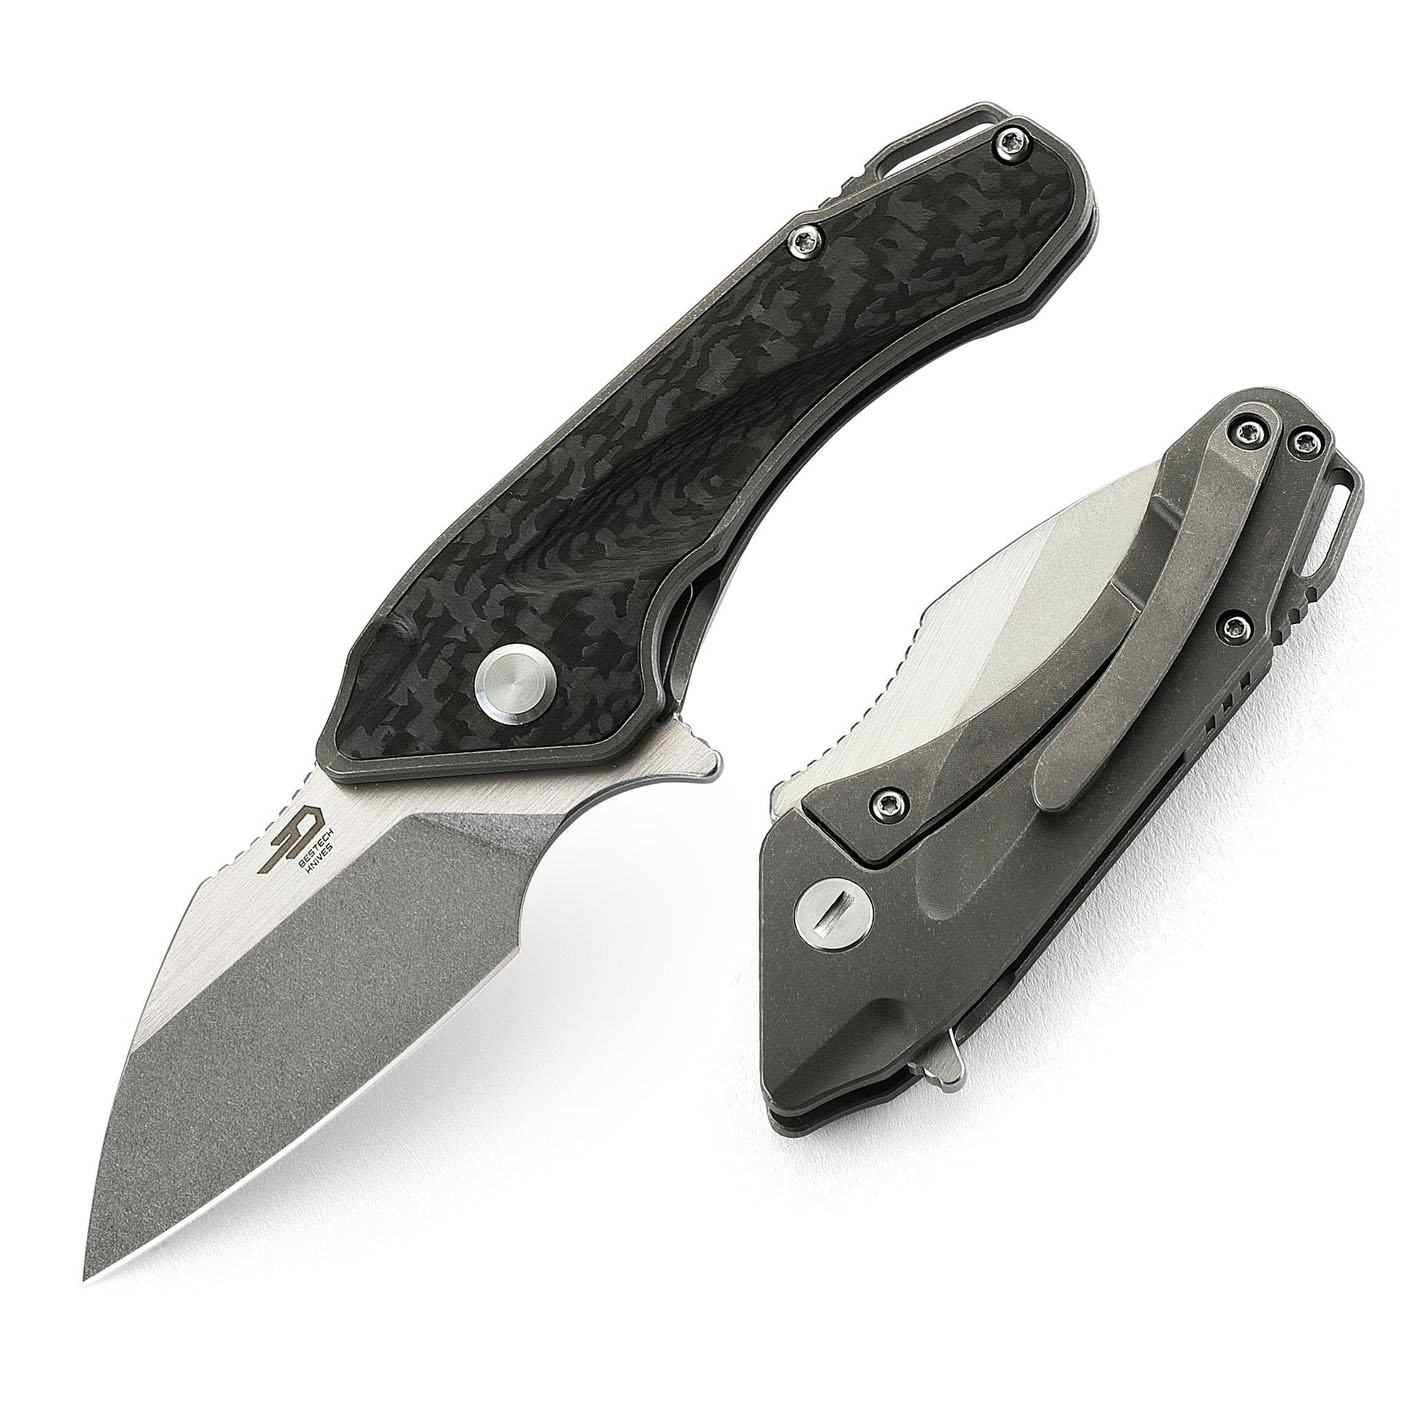 Bestech Knives Goblin CPM-S35VN钢 钛合金镶嵌碳纤维柄 BT1711E 1180